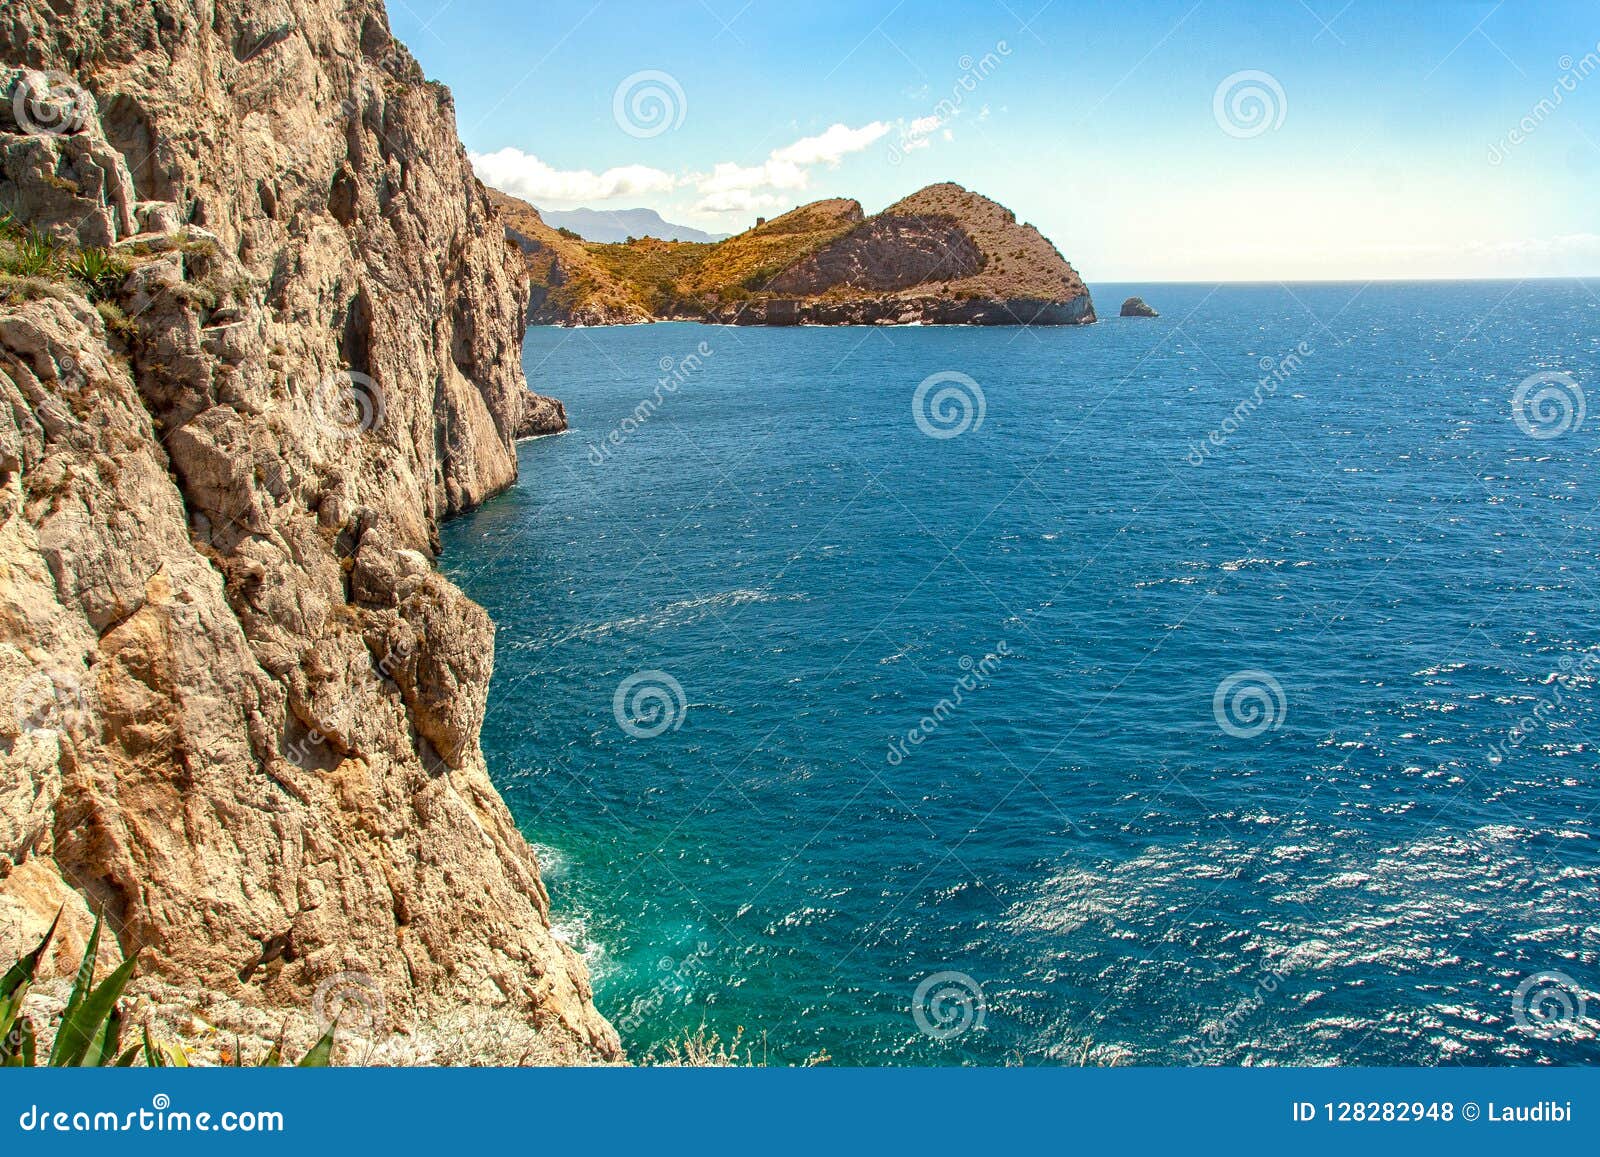 punta campanella and landscape of sorrento`s peninsula